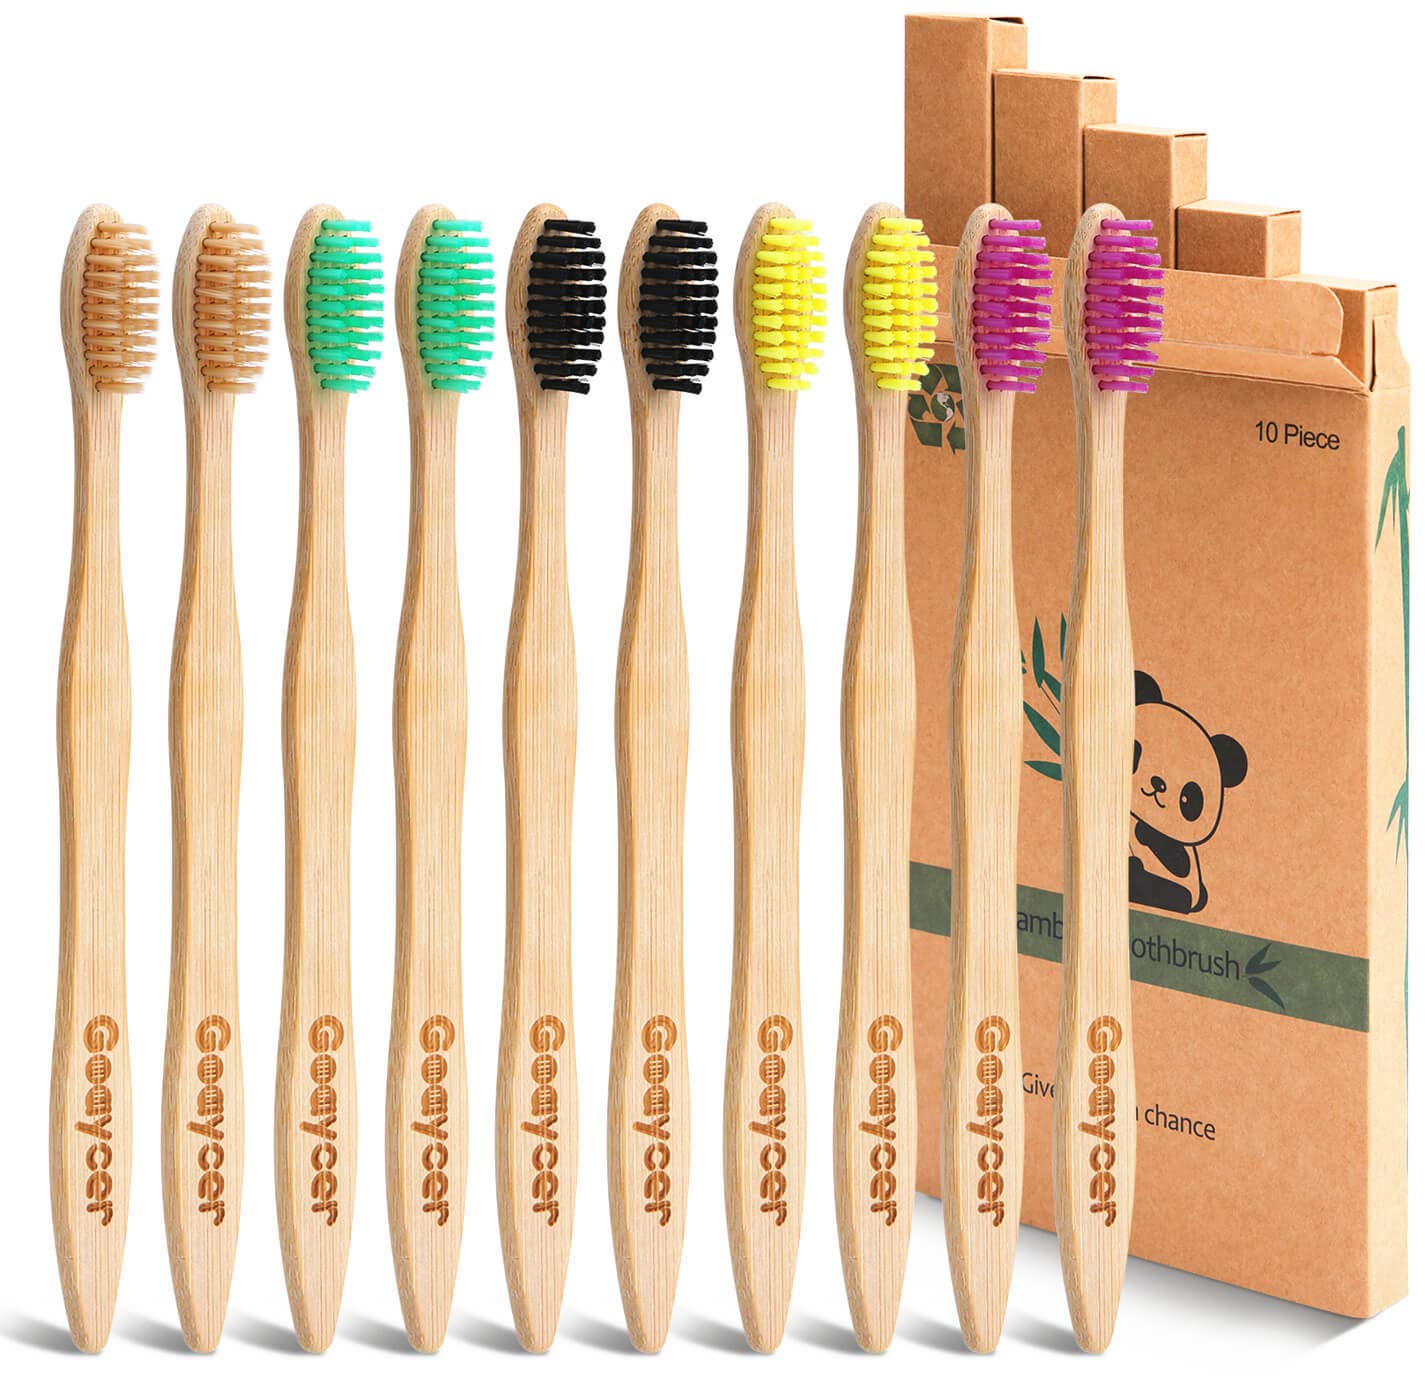 Goaycer Bamboo Toothbrushes Medium Bristles - Family 10 Pack Eco Friendly Biodegradable Organic Premium Wooden Toothbrush